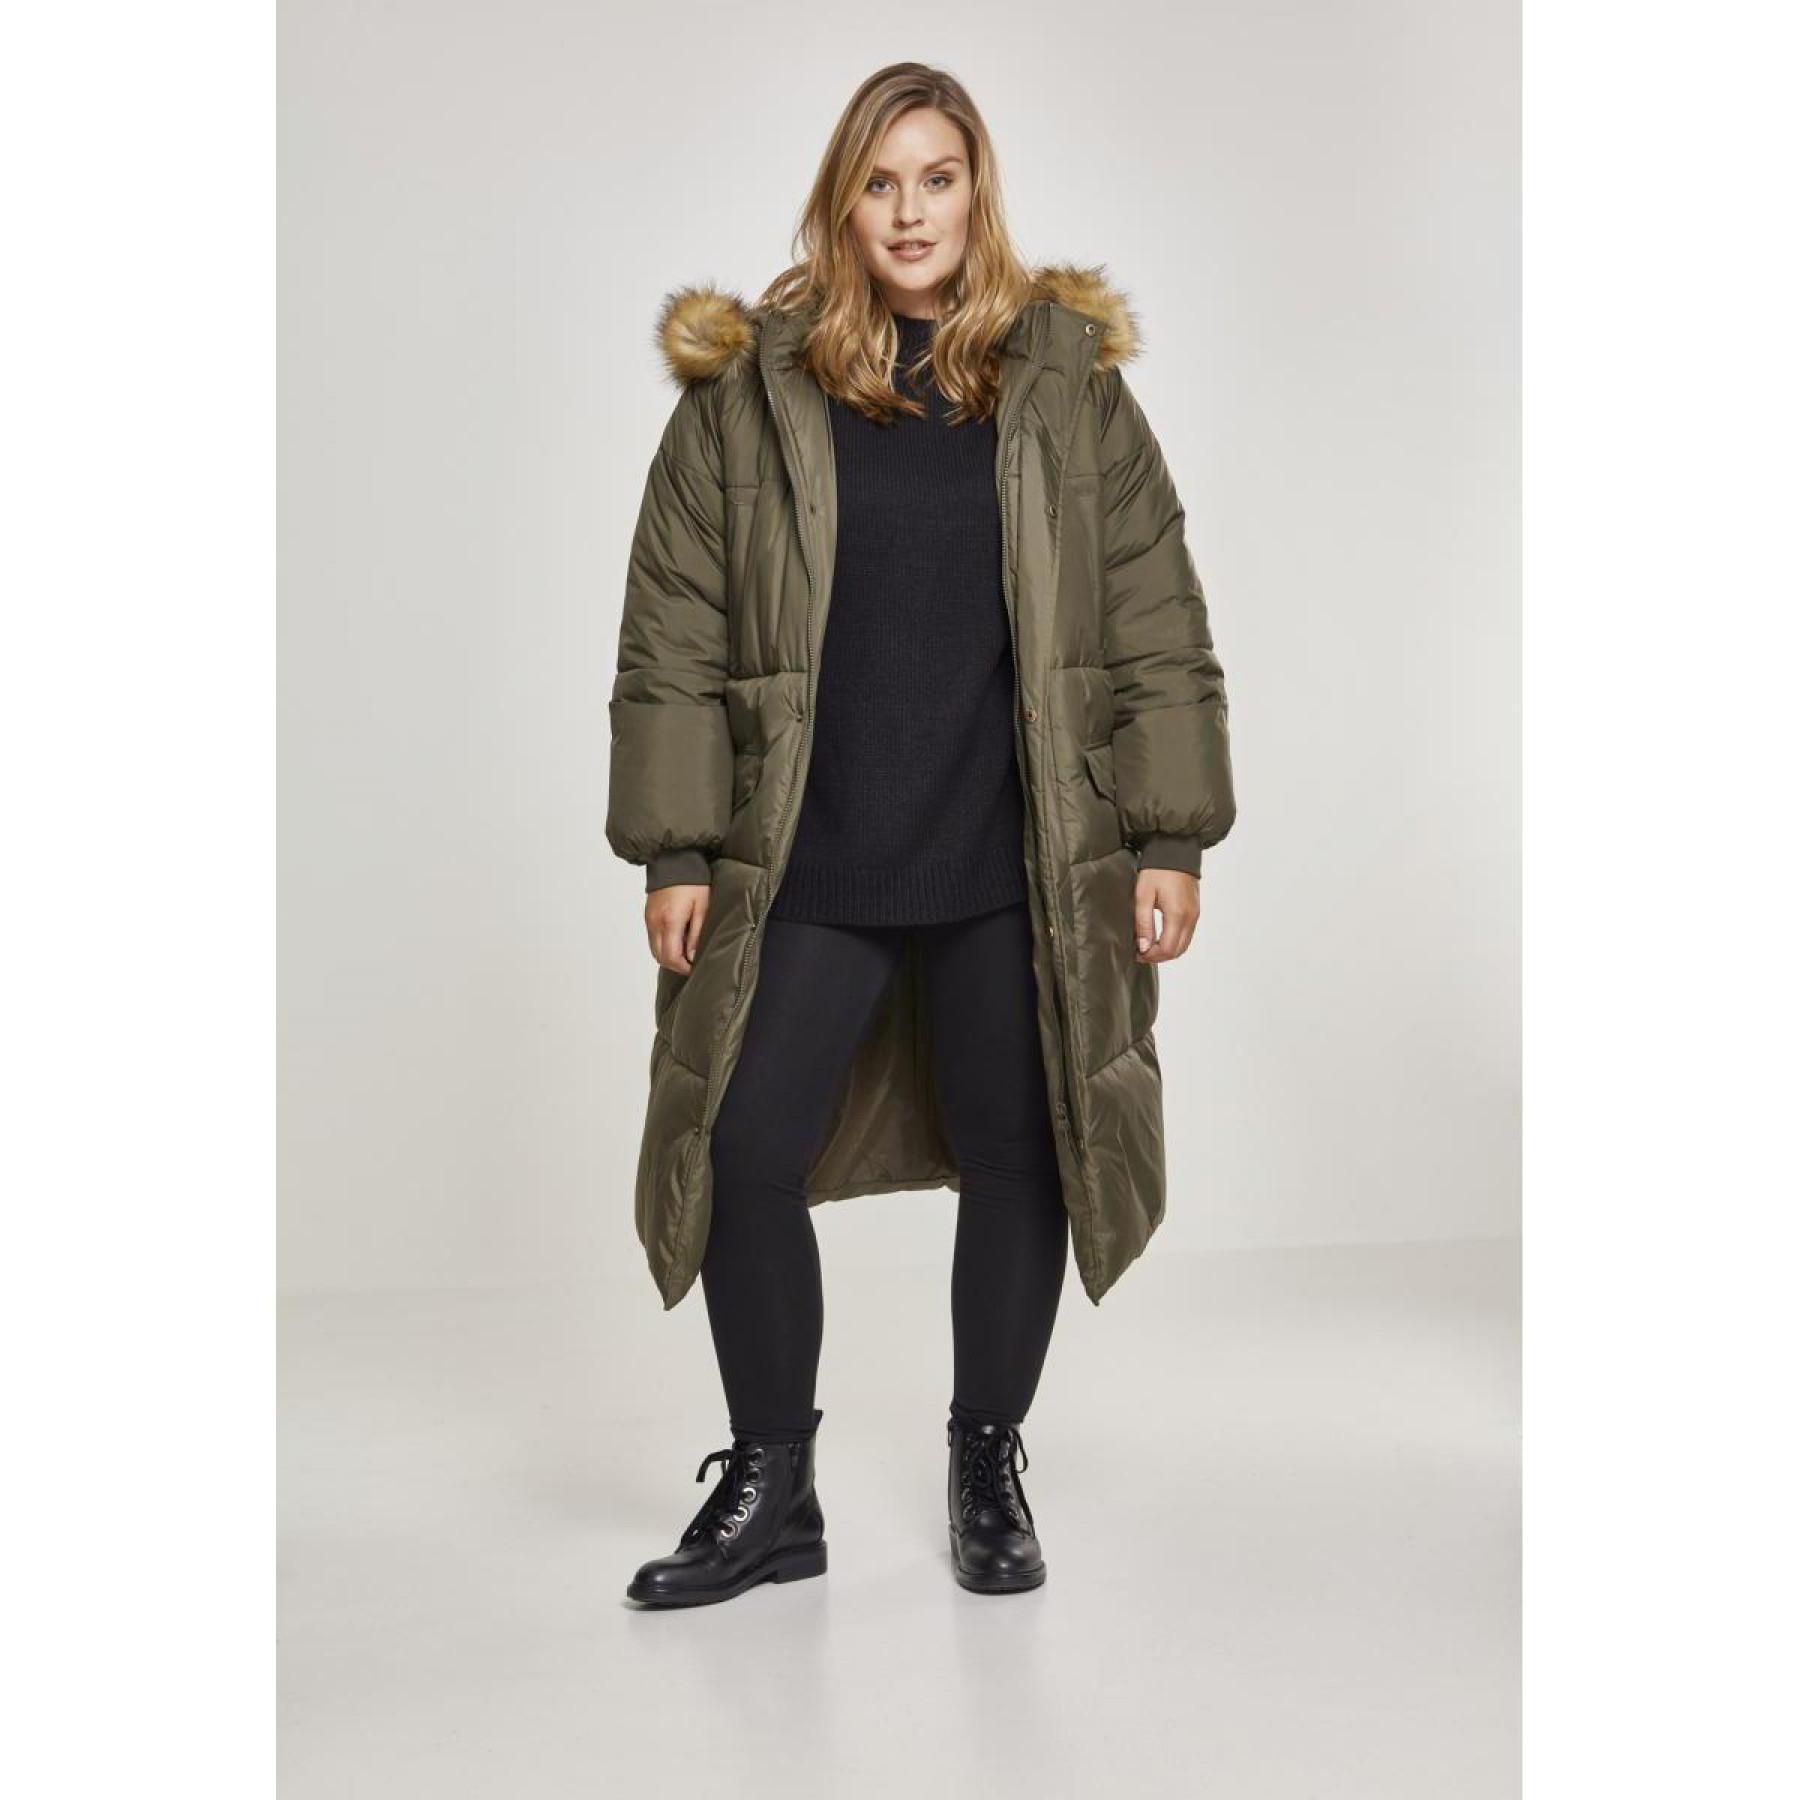 - parka Lifestyle coat - Classic Oversize Women\'s - Urban and Woman Coats Jackets